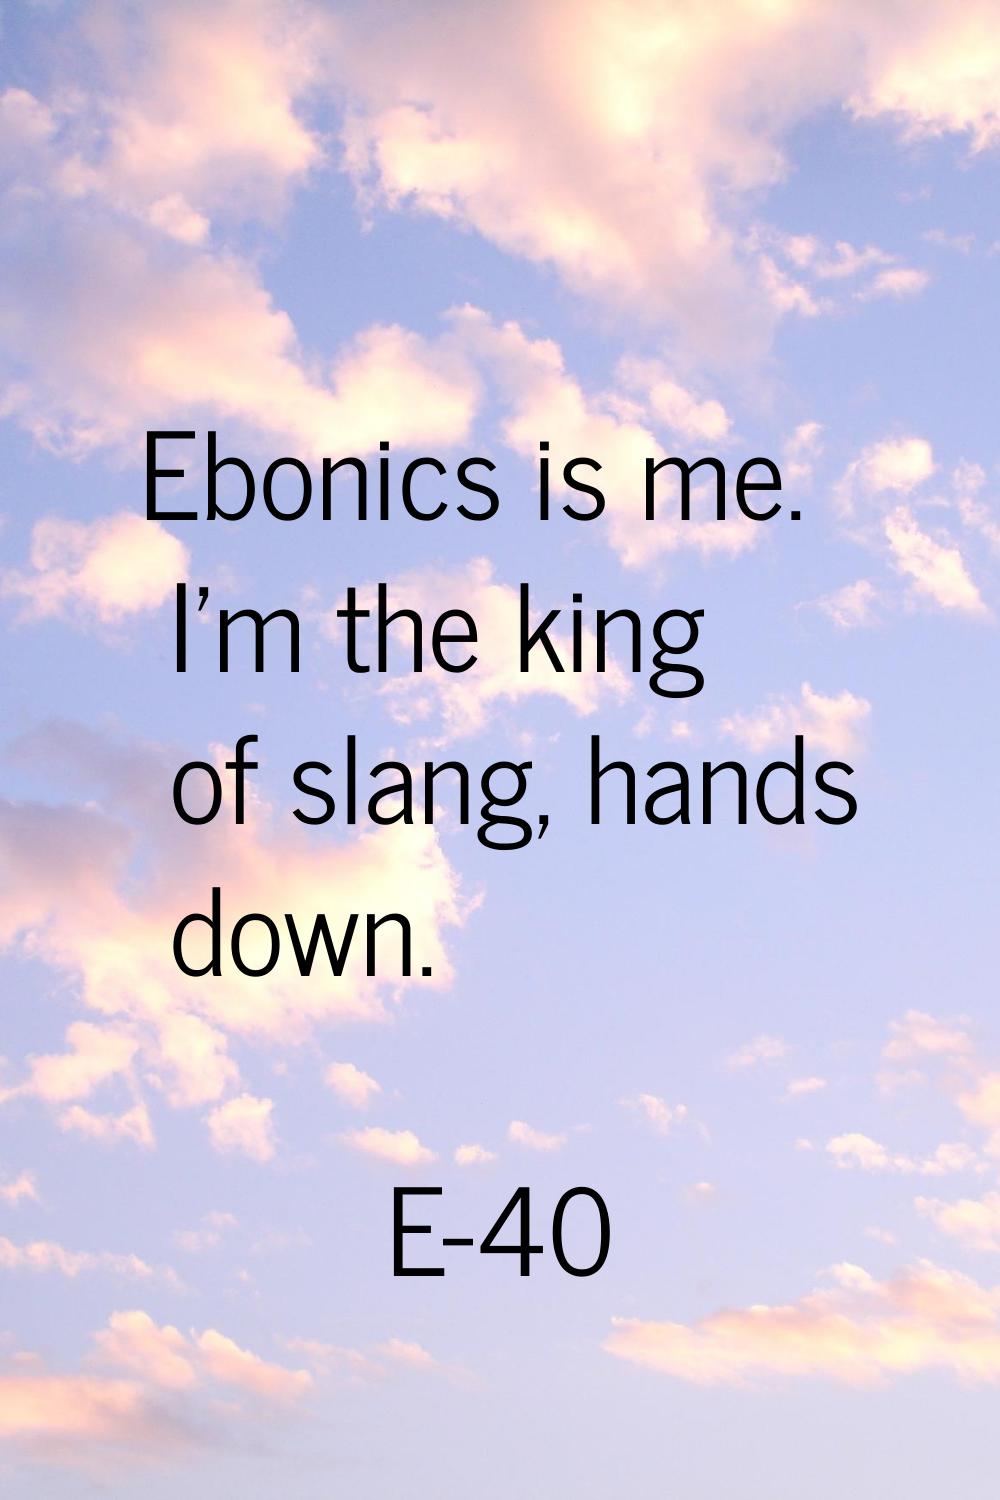 Ebonics is me. I'm the king of slang, hands down.